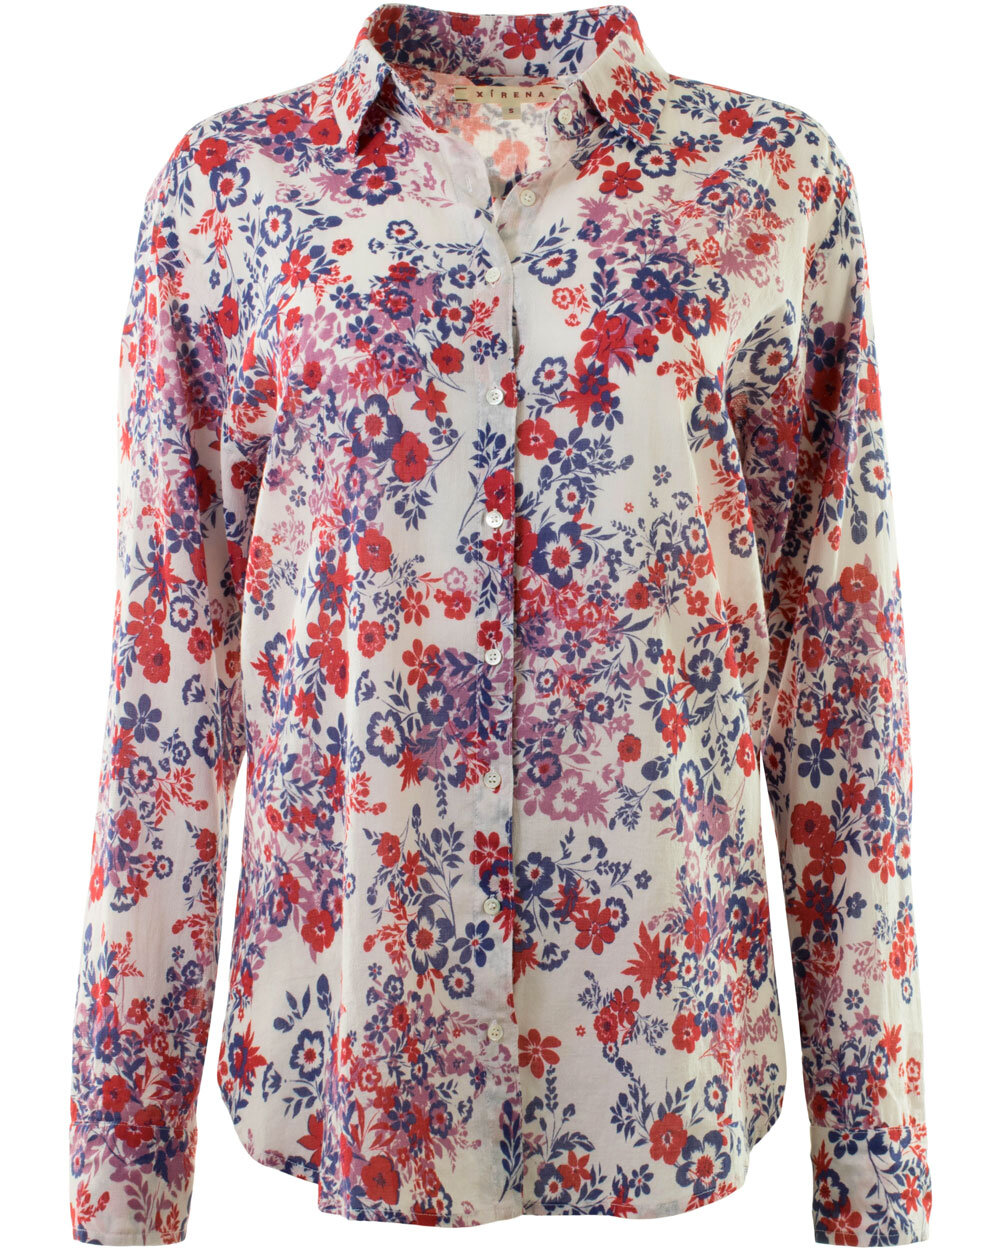 Beau Shirt - Floral - Kingfisher Road - Online Boutique